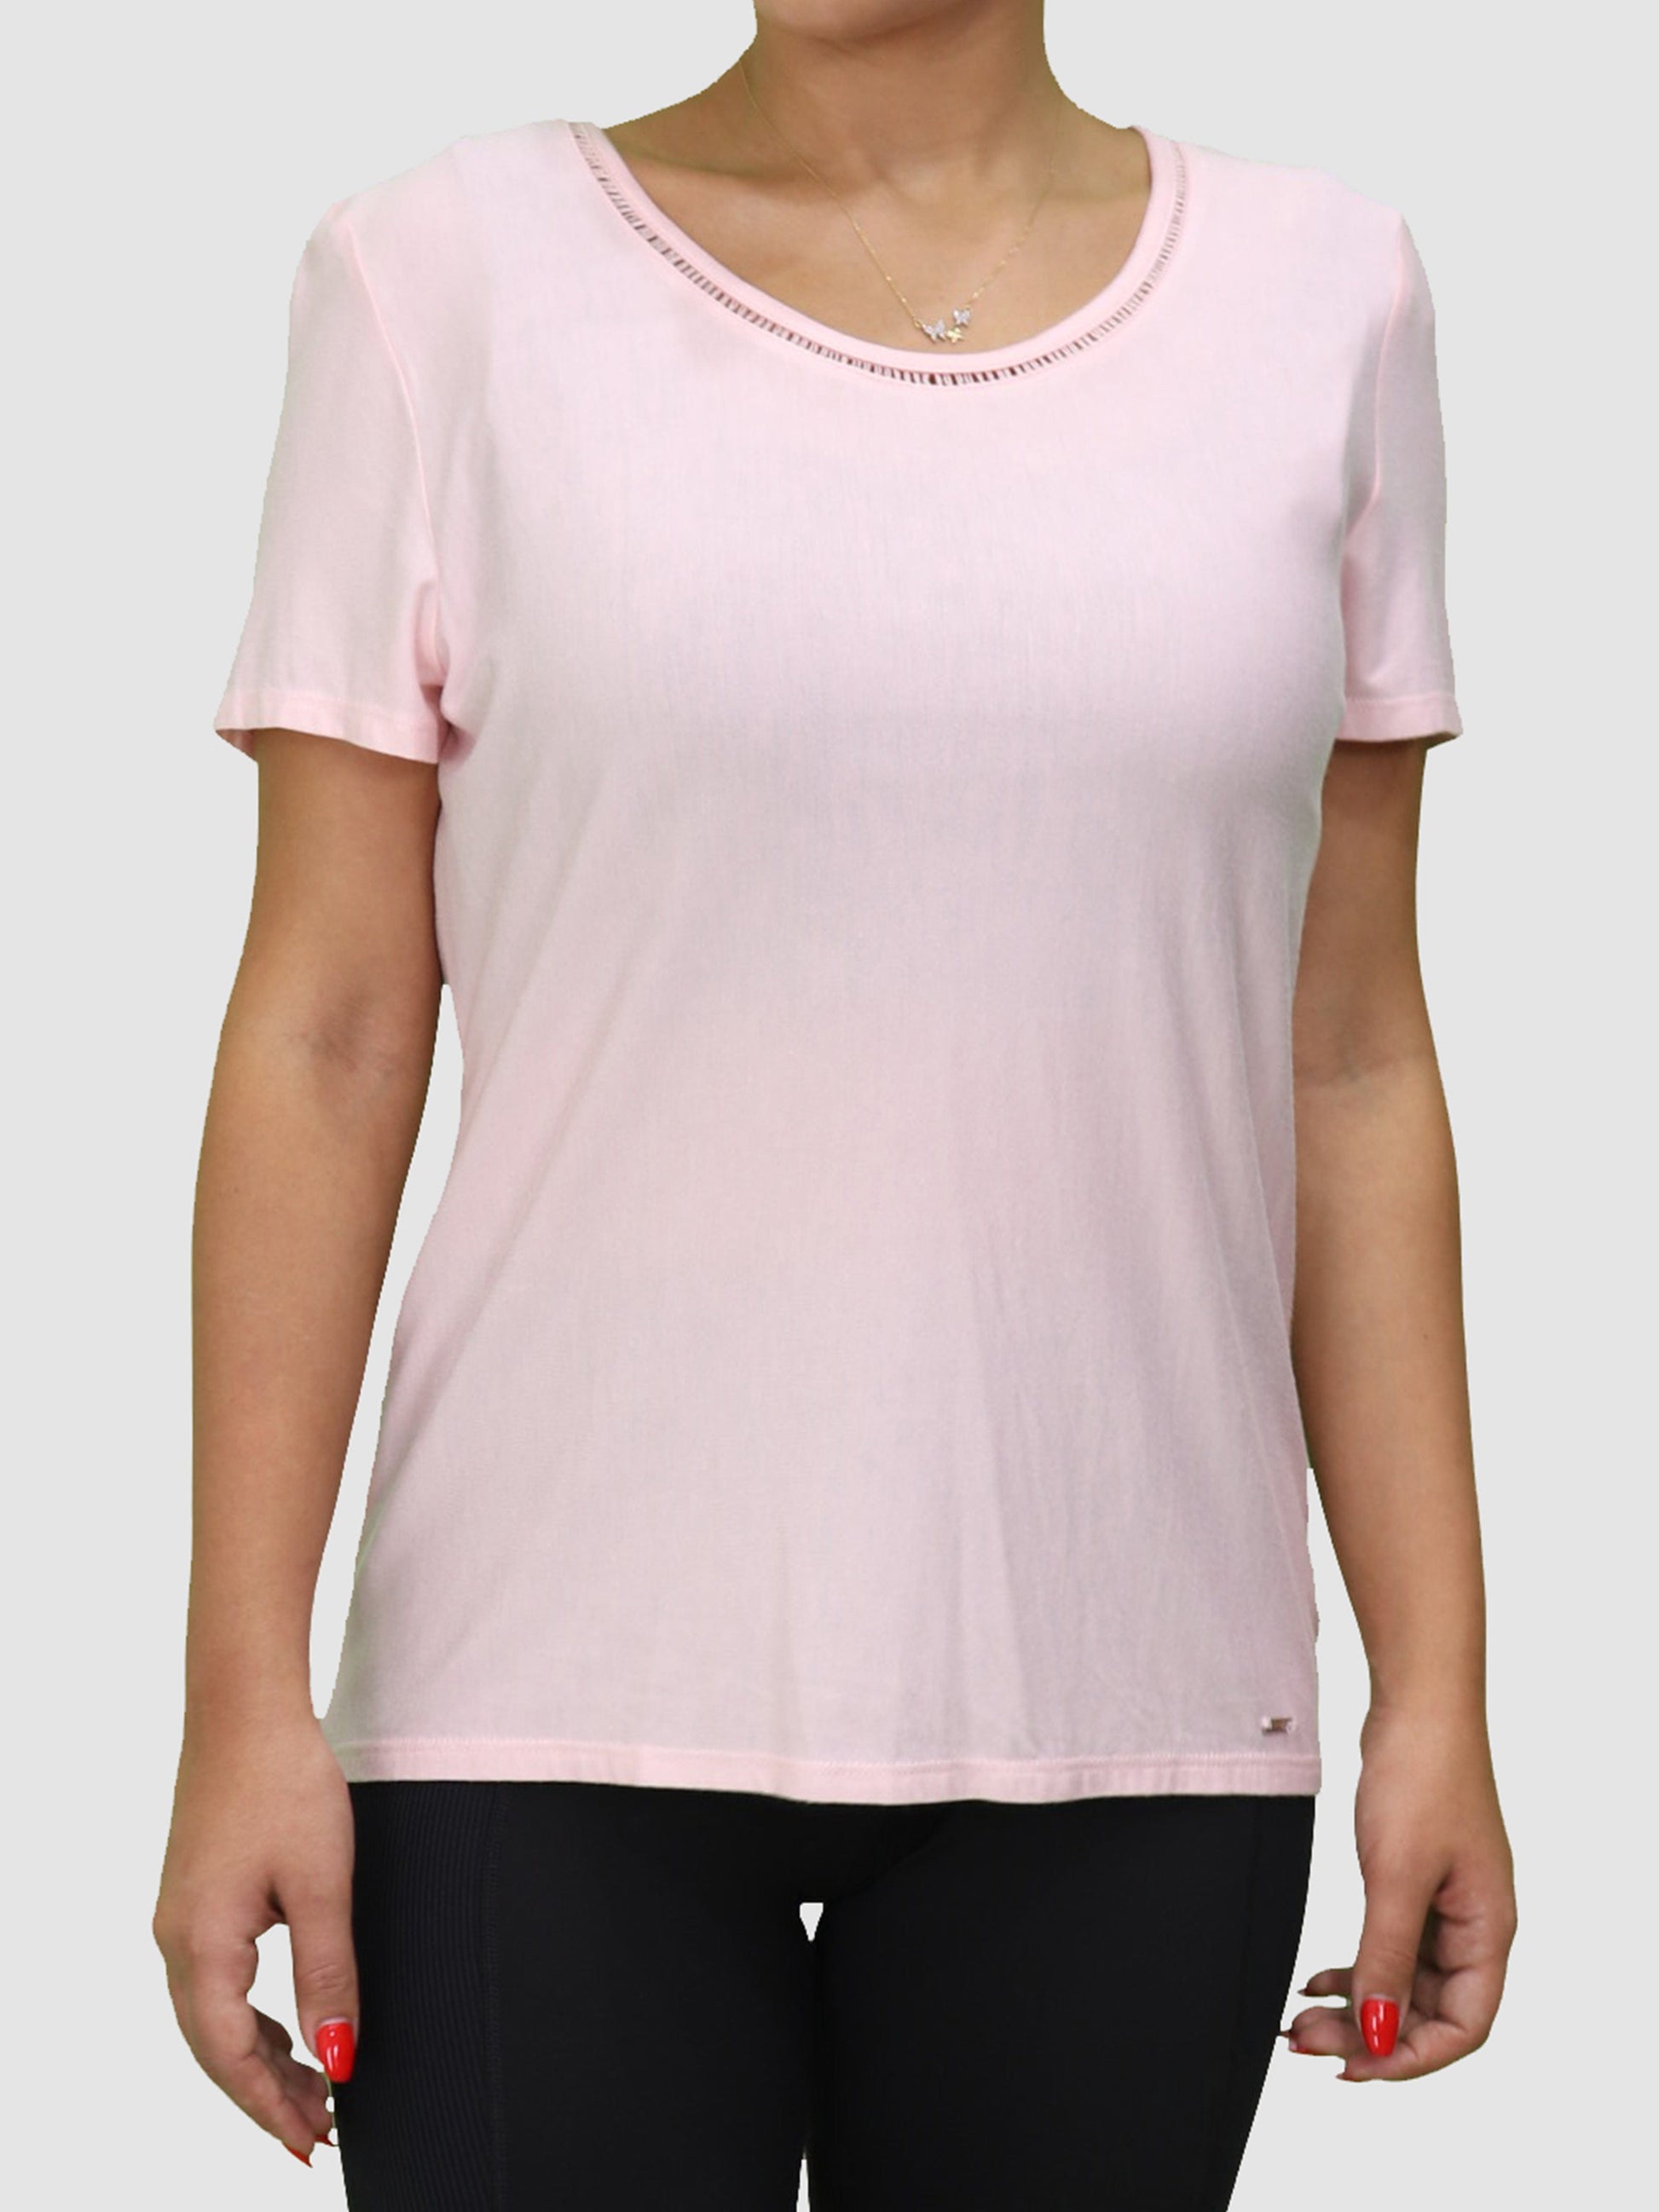 Tommy Hilfiger Womens Tops S / Pink Short Sleeve T-Shirt